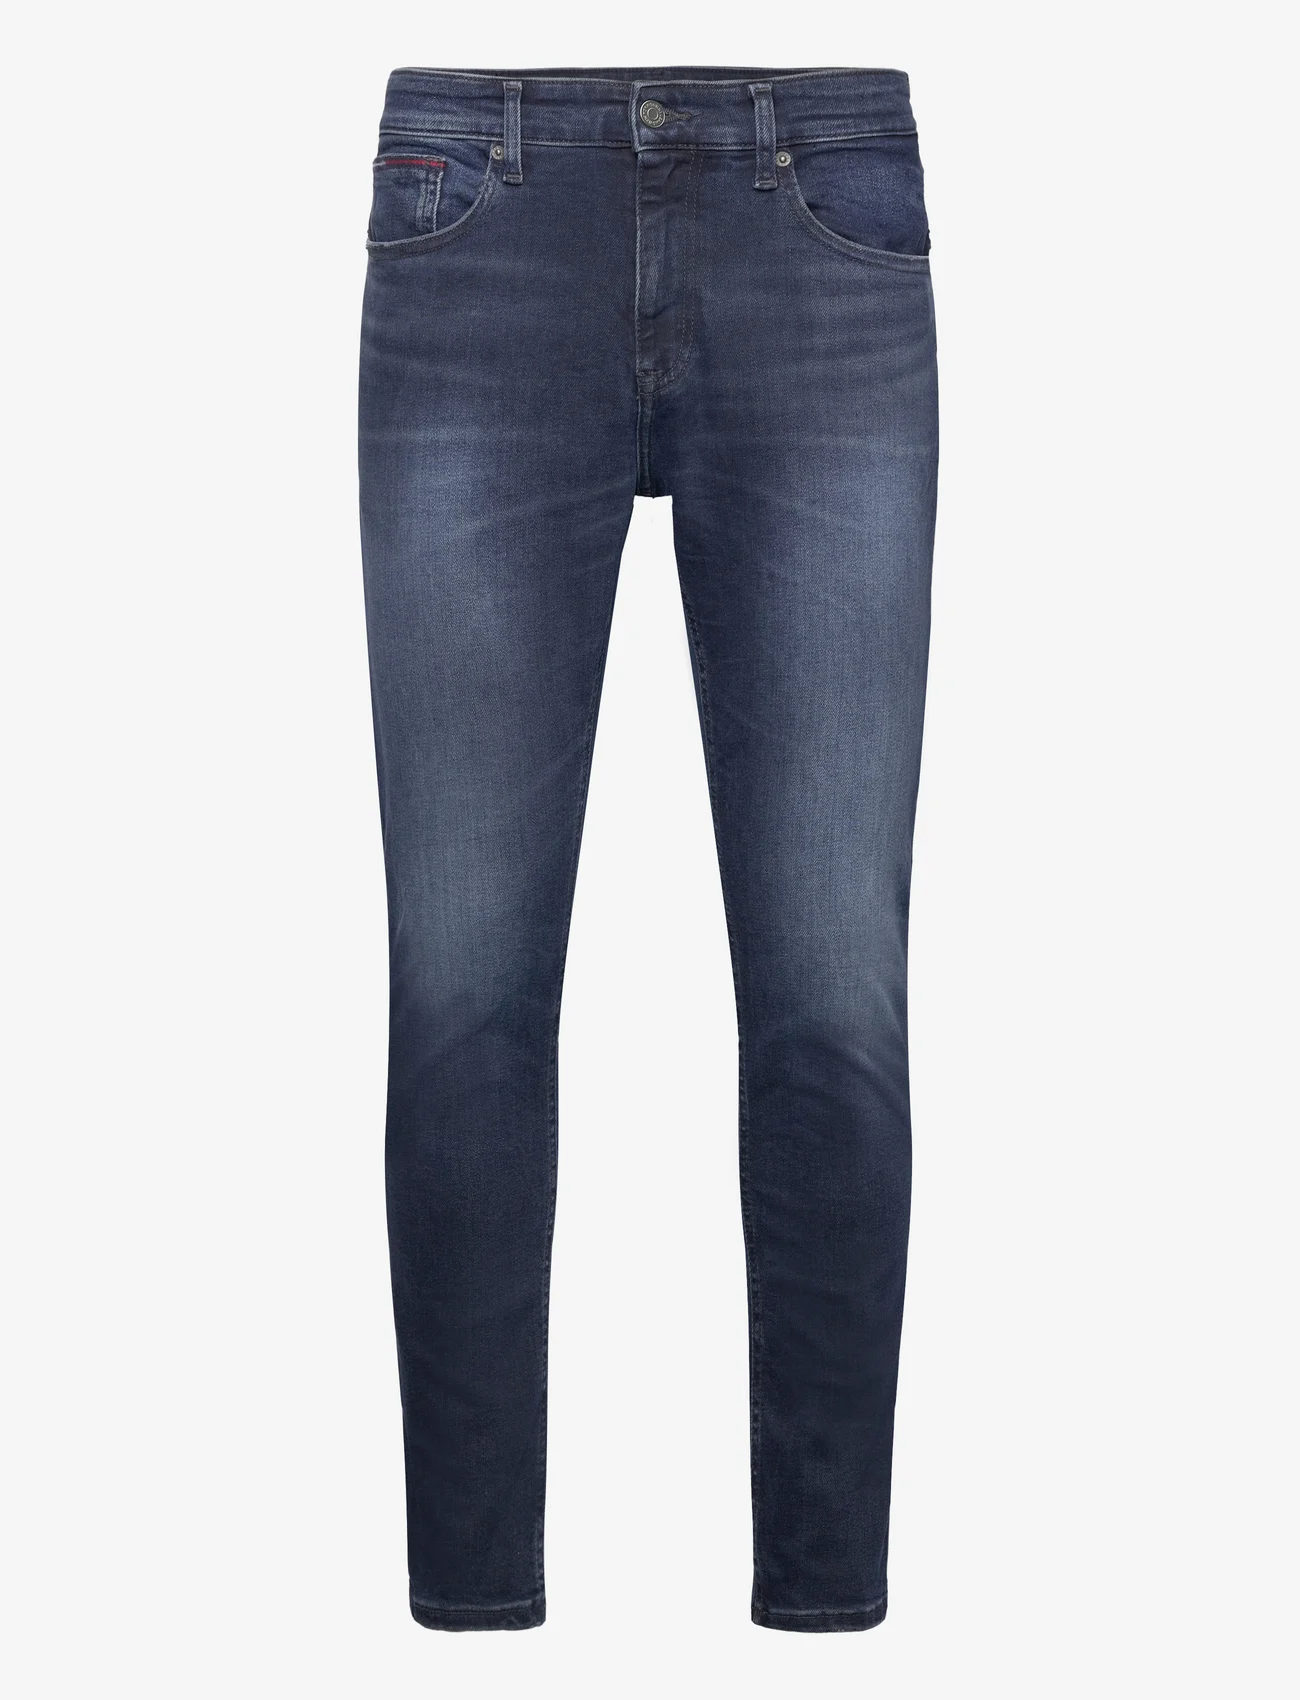 Tommy Jeans - AUSTIN SLIM TPRD DG3368 - slim jeans - denim dark - 0